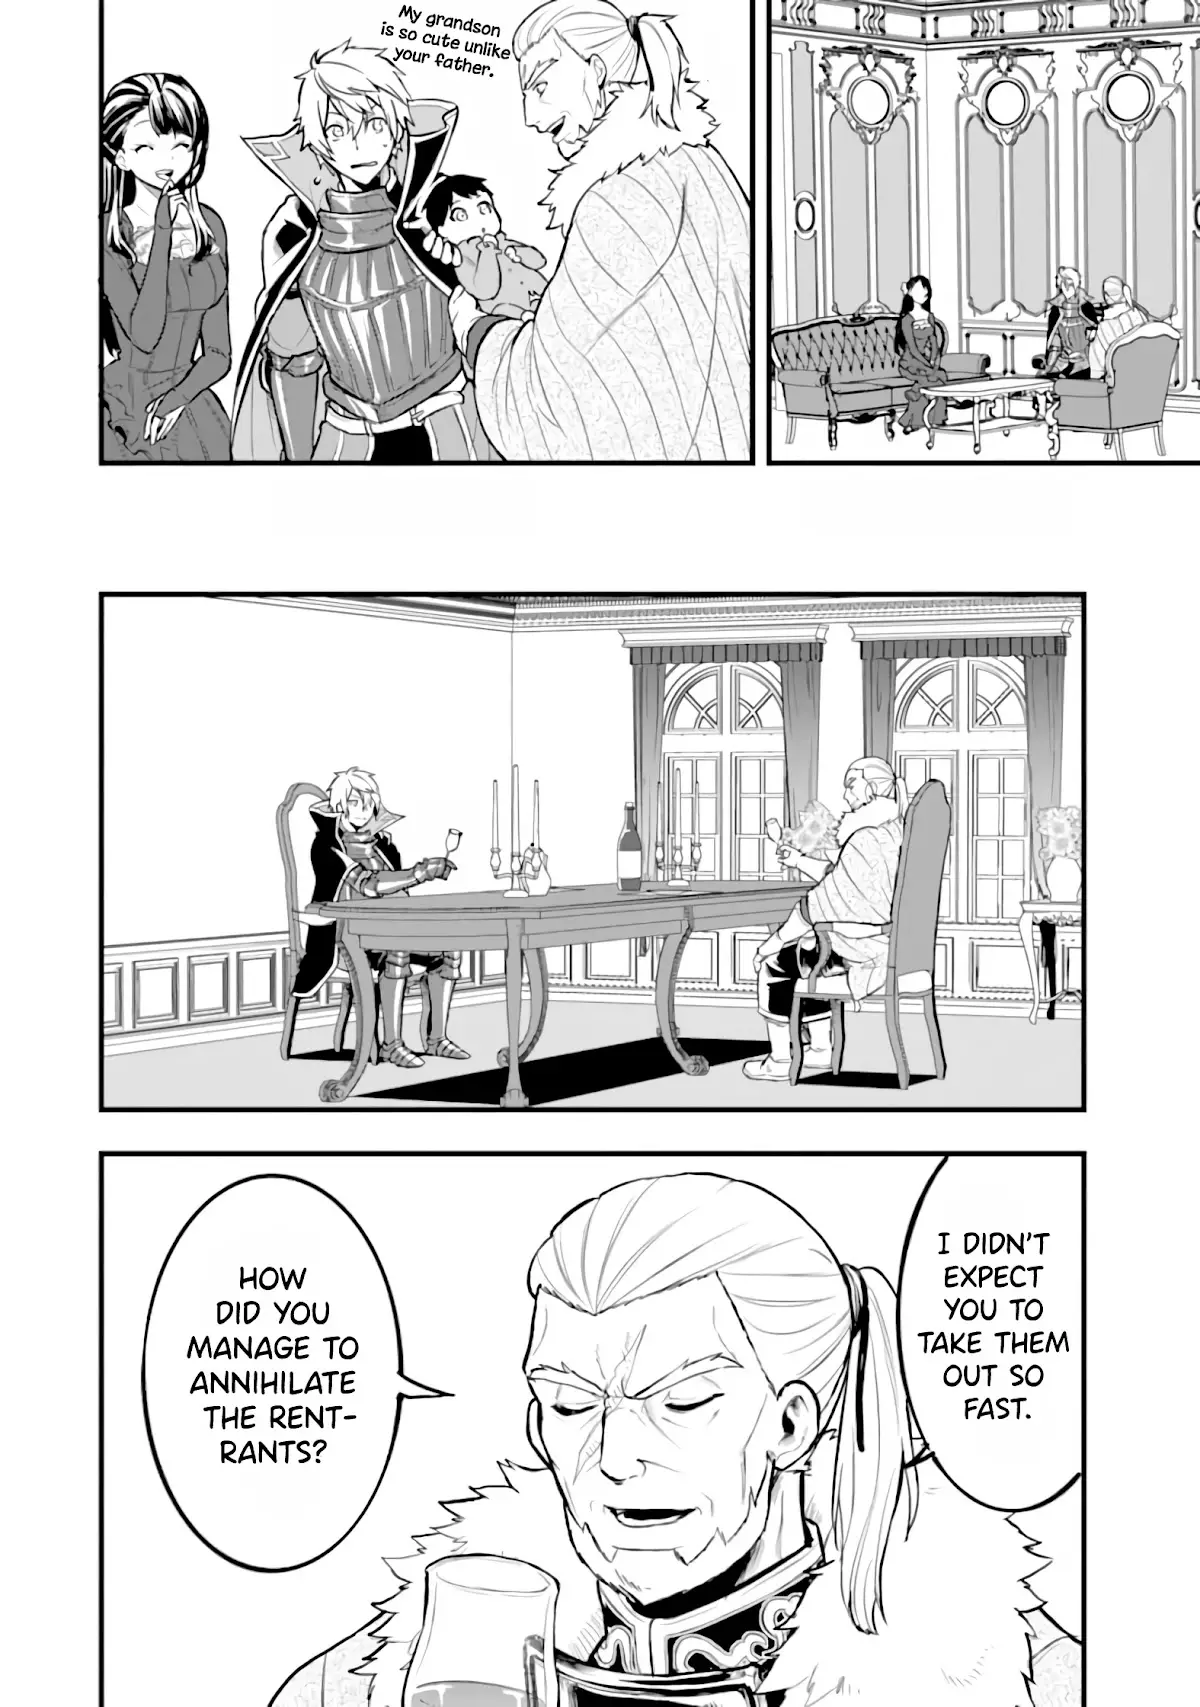 Mysterious Job Called Oda Nobunaga - 17 page 29-3660f6fe